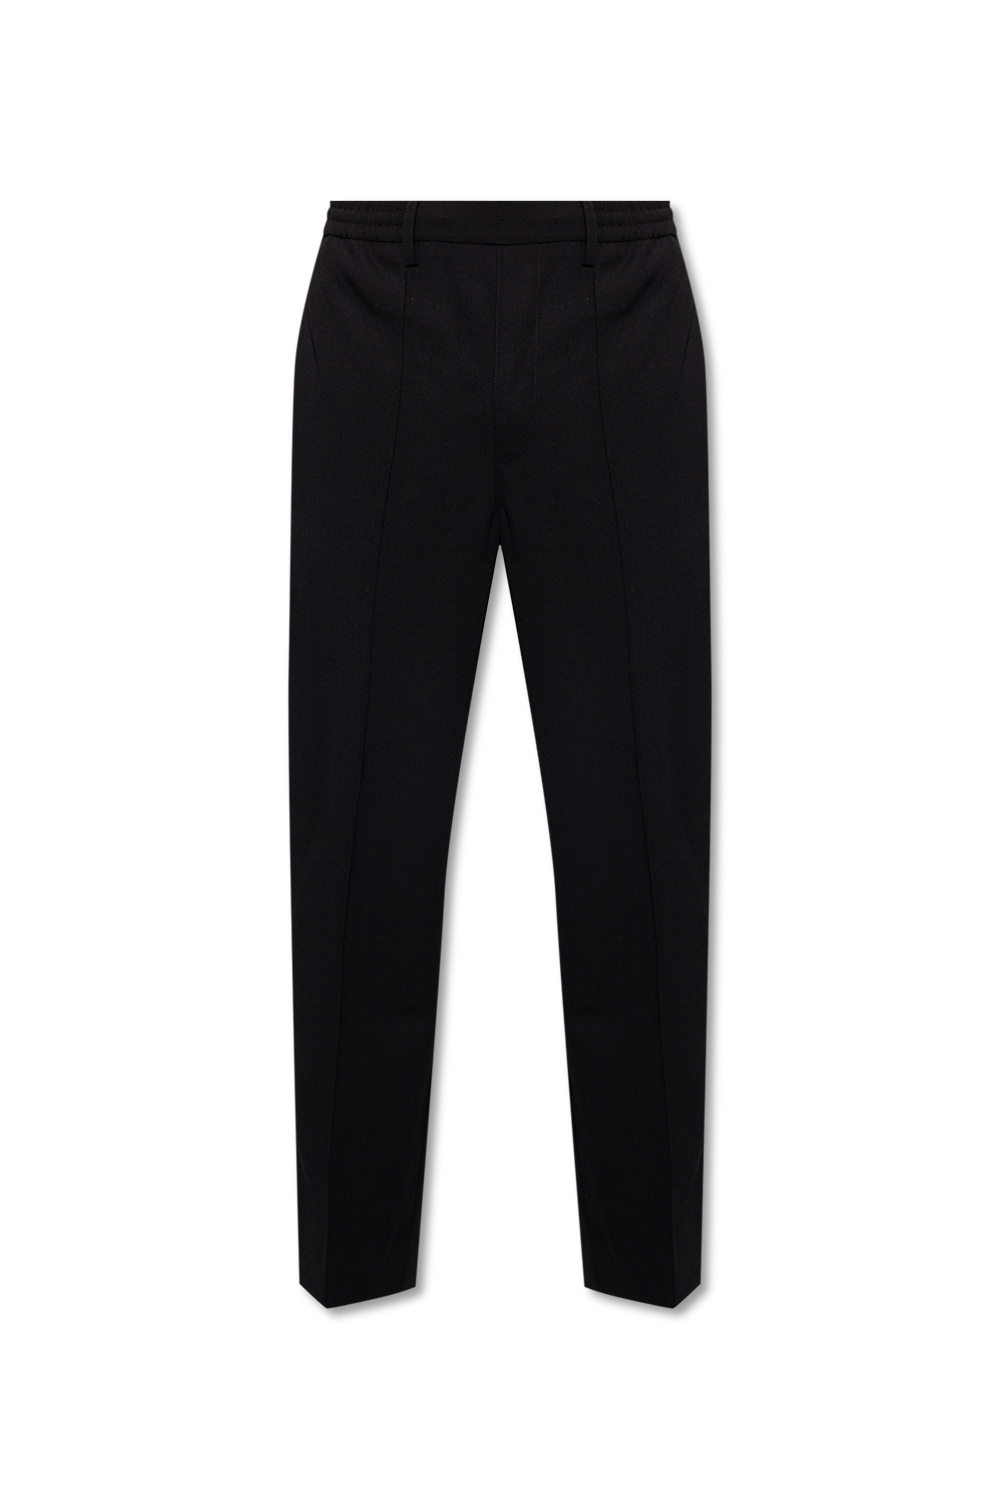 rhude oversize logo print shorts item Pleat-front trousers